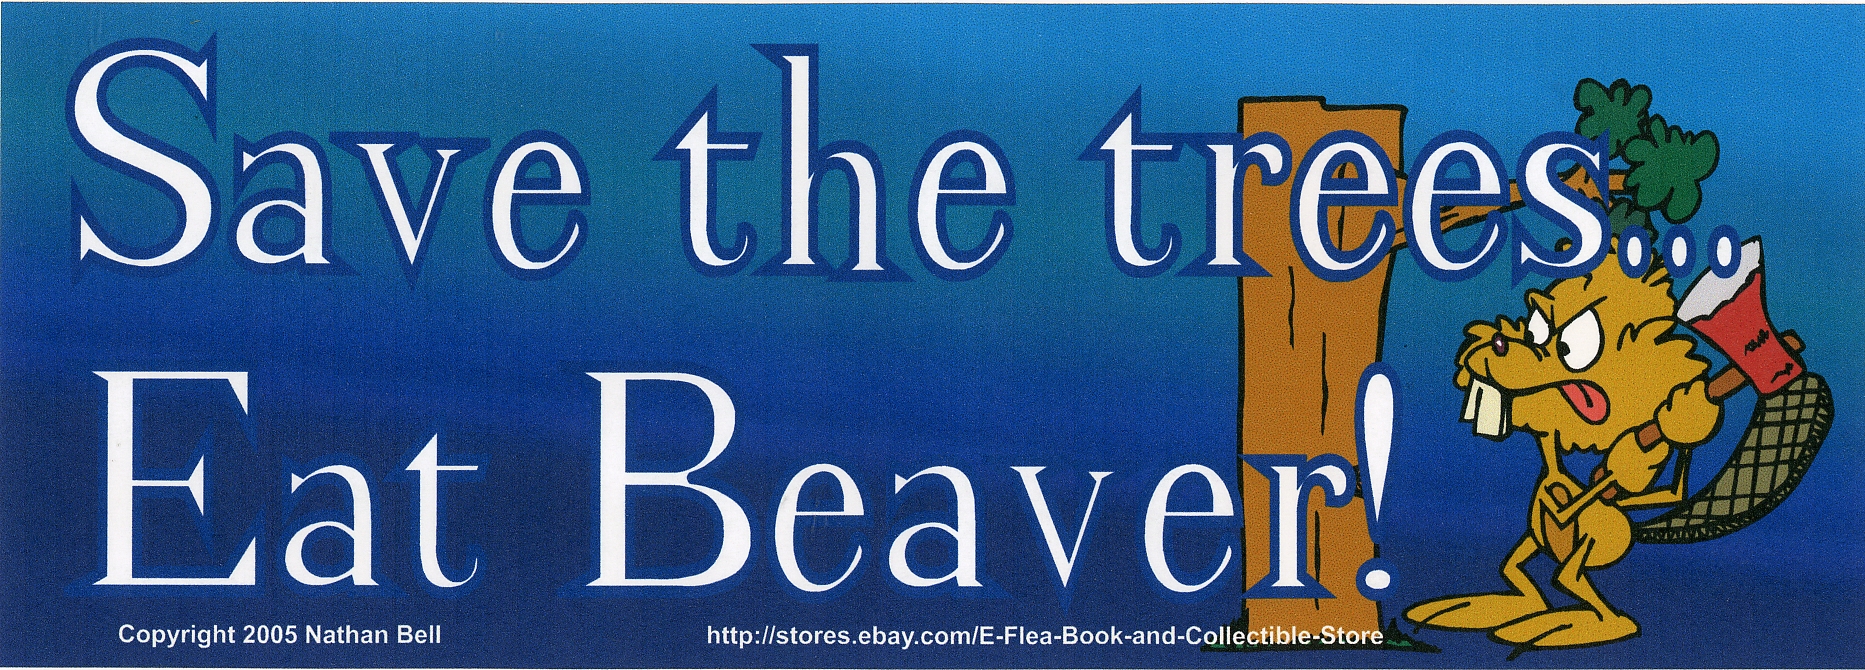 eat beaver